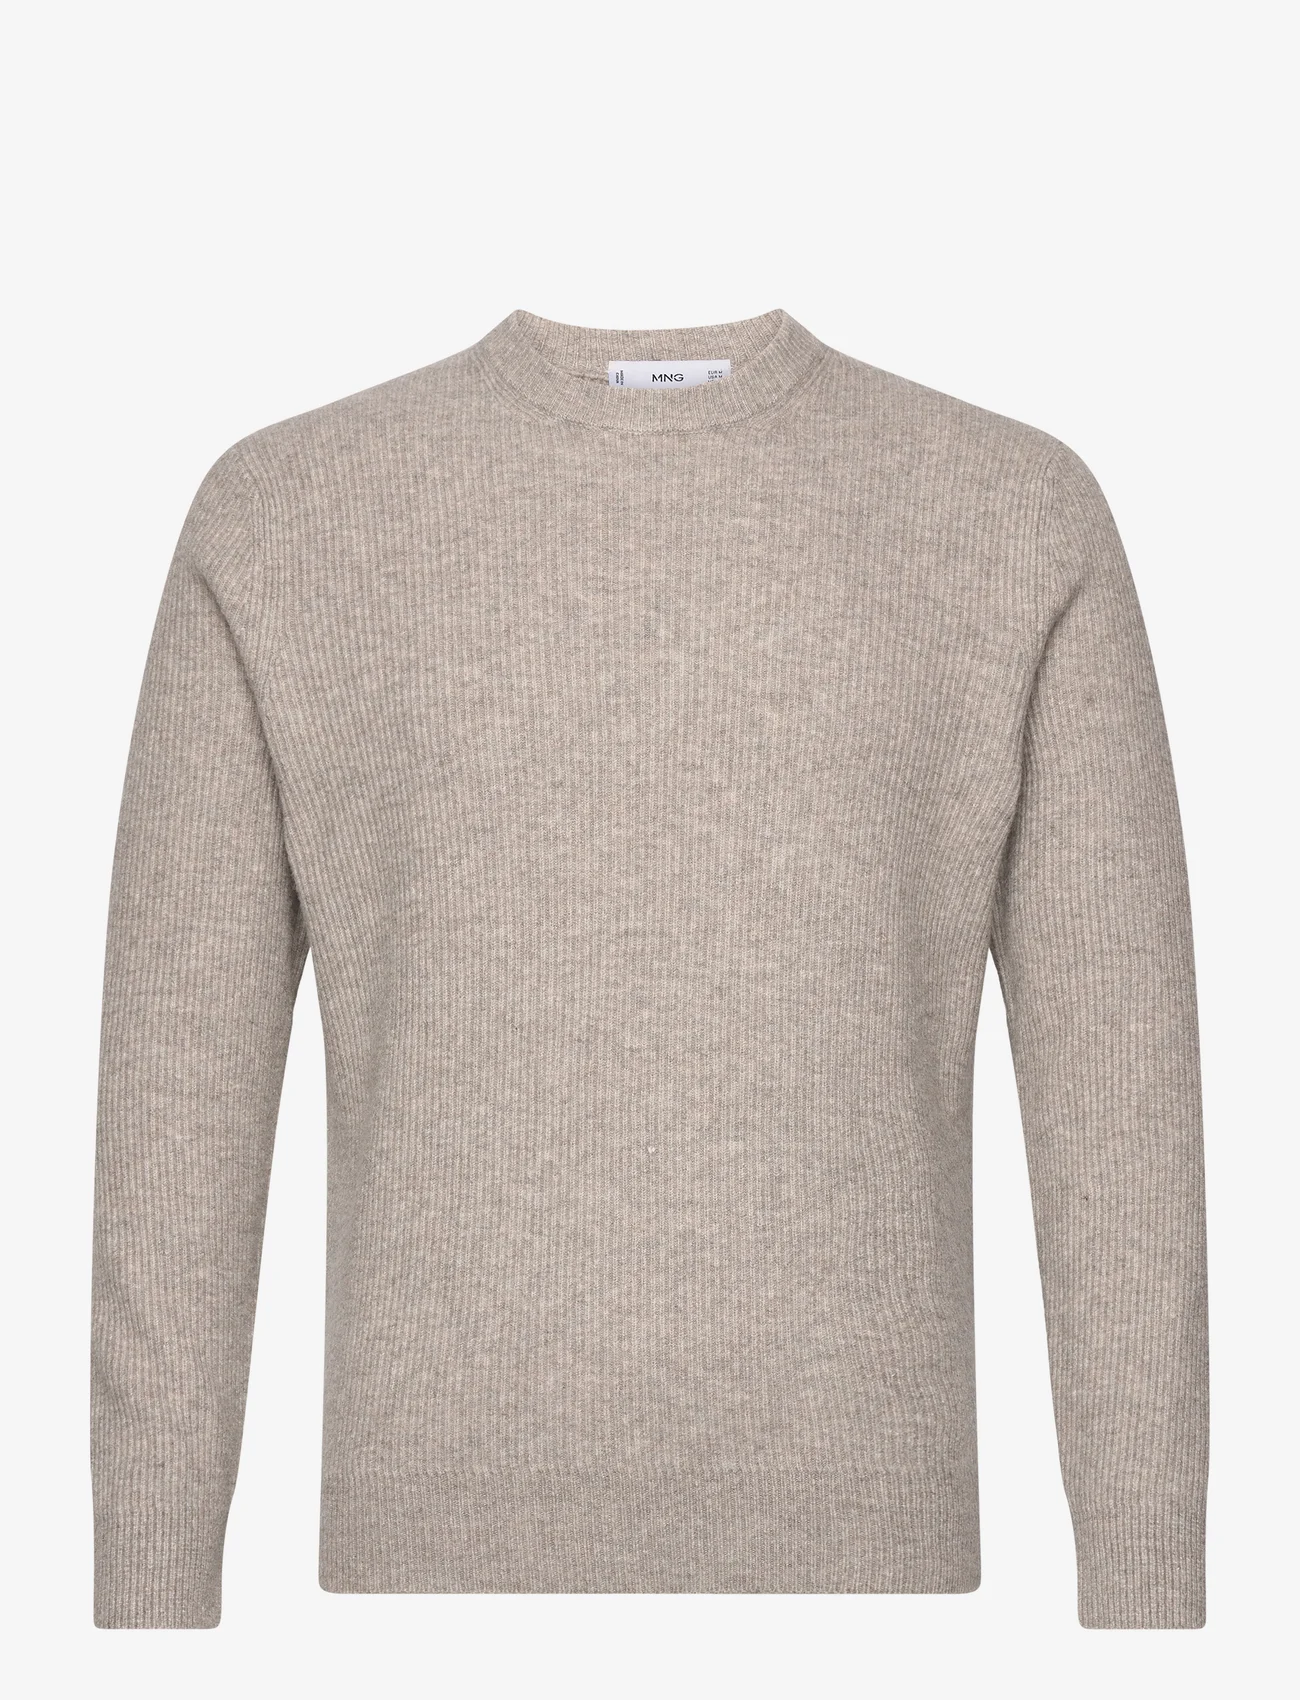 Mango - Ribbed knit sweater - strik med rund hals - lt pastel brown - 0